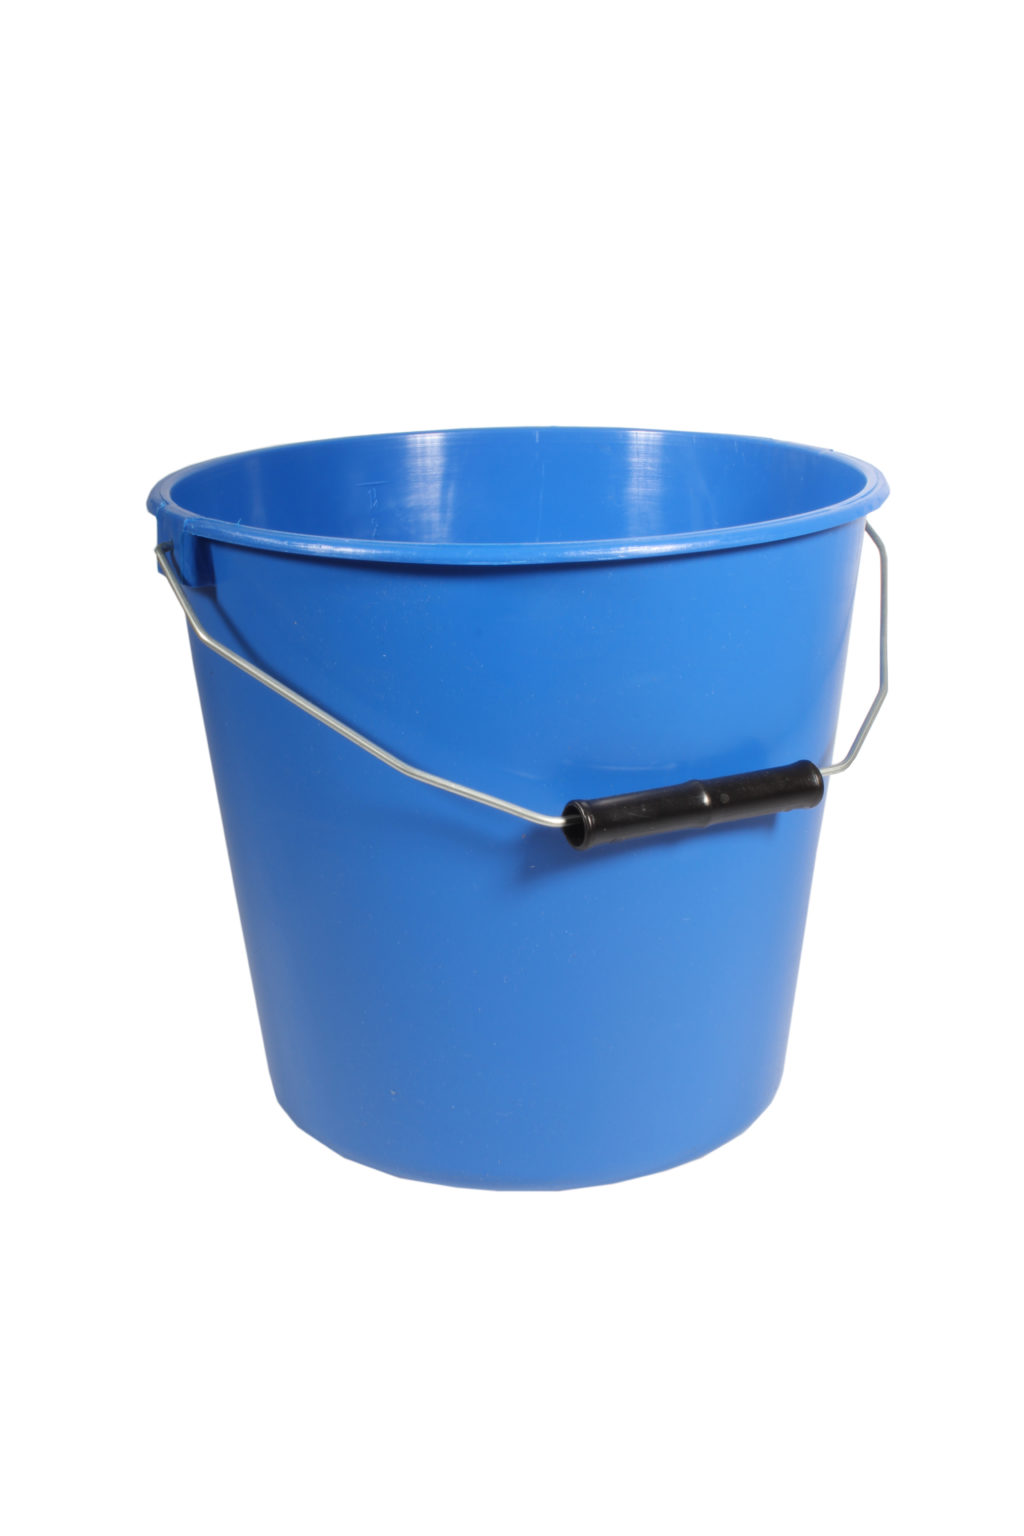 Lamina Royal 1.25 Gallon Bucket